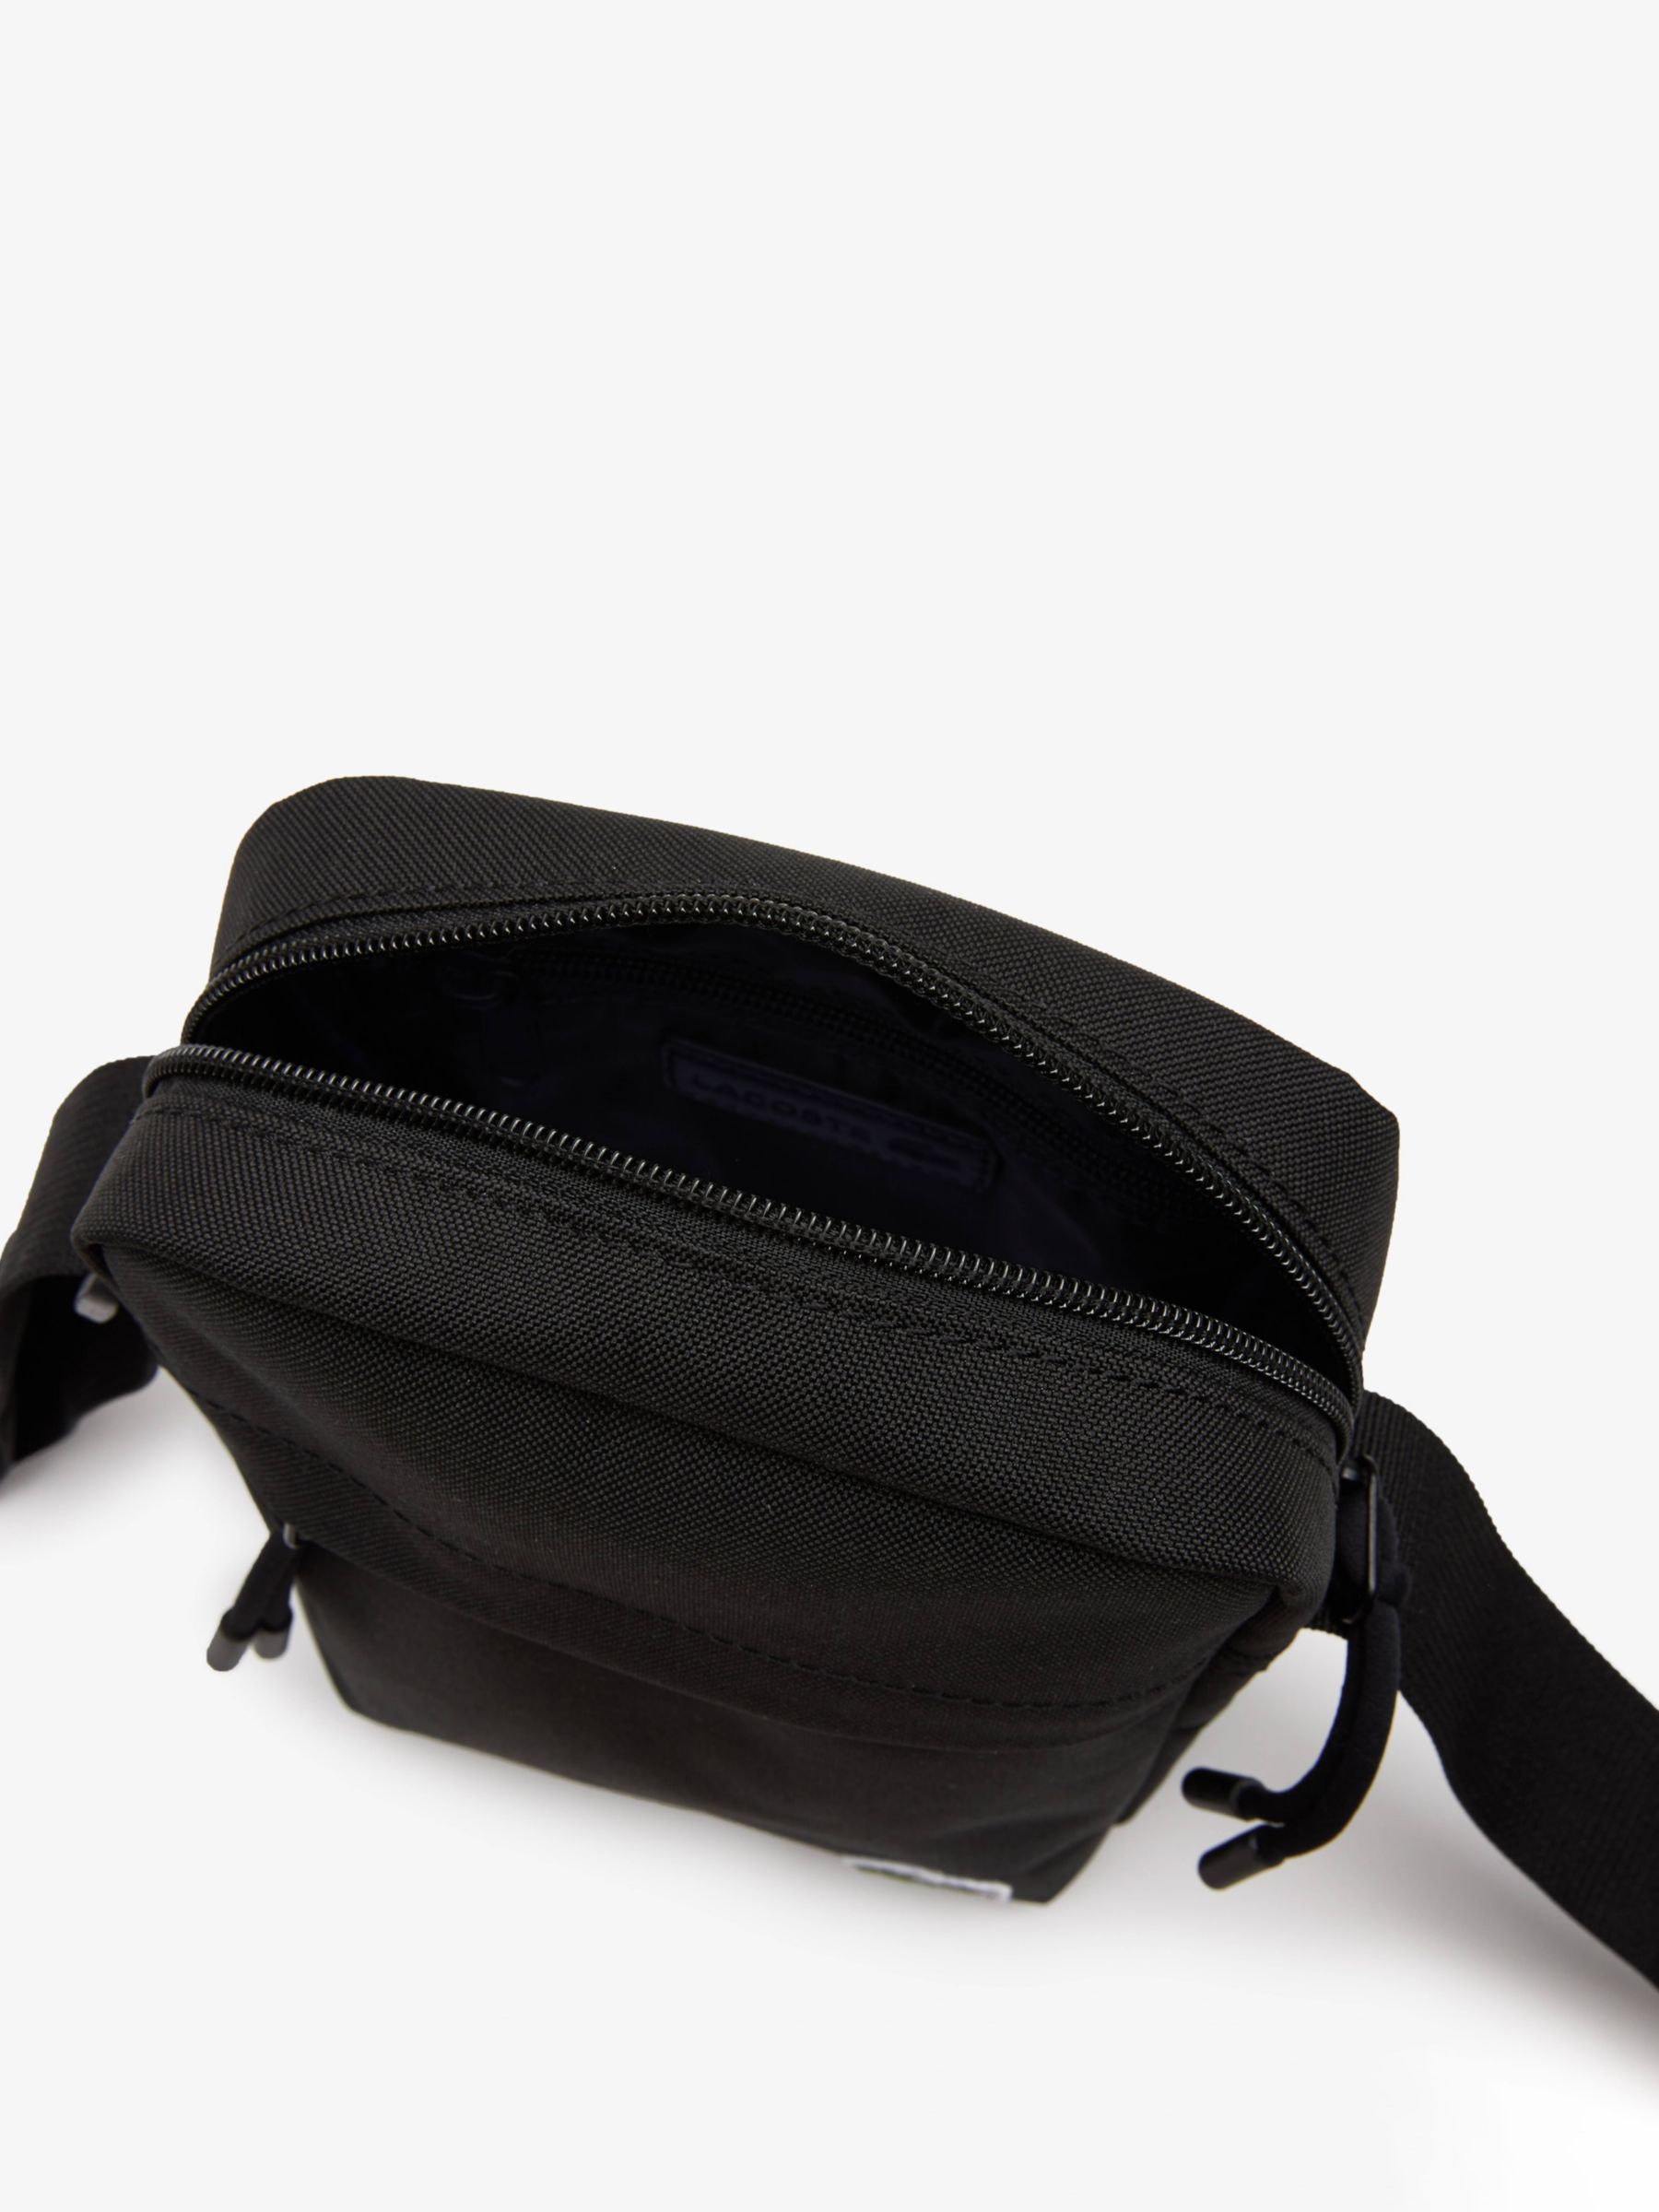 Lacoste Zip Cross Body Bag, Black at John Lewis & Partners